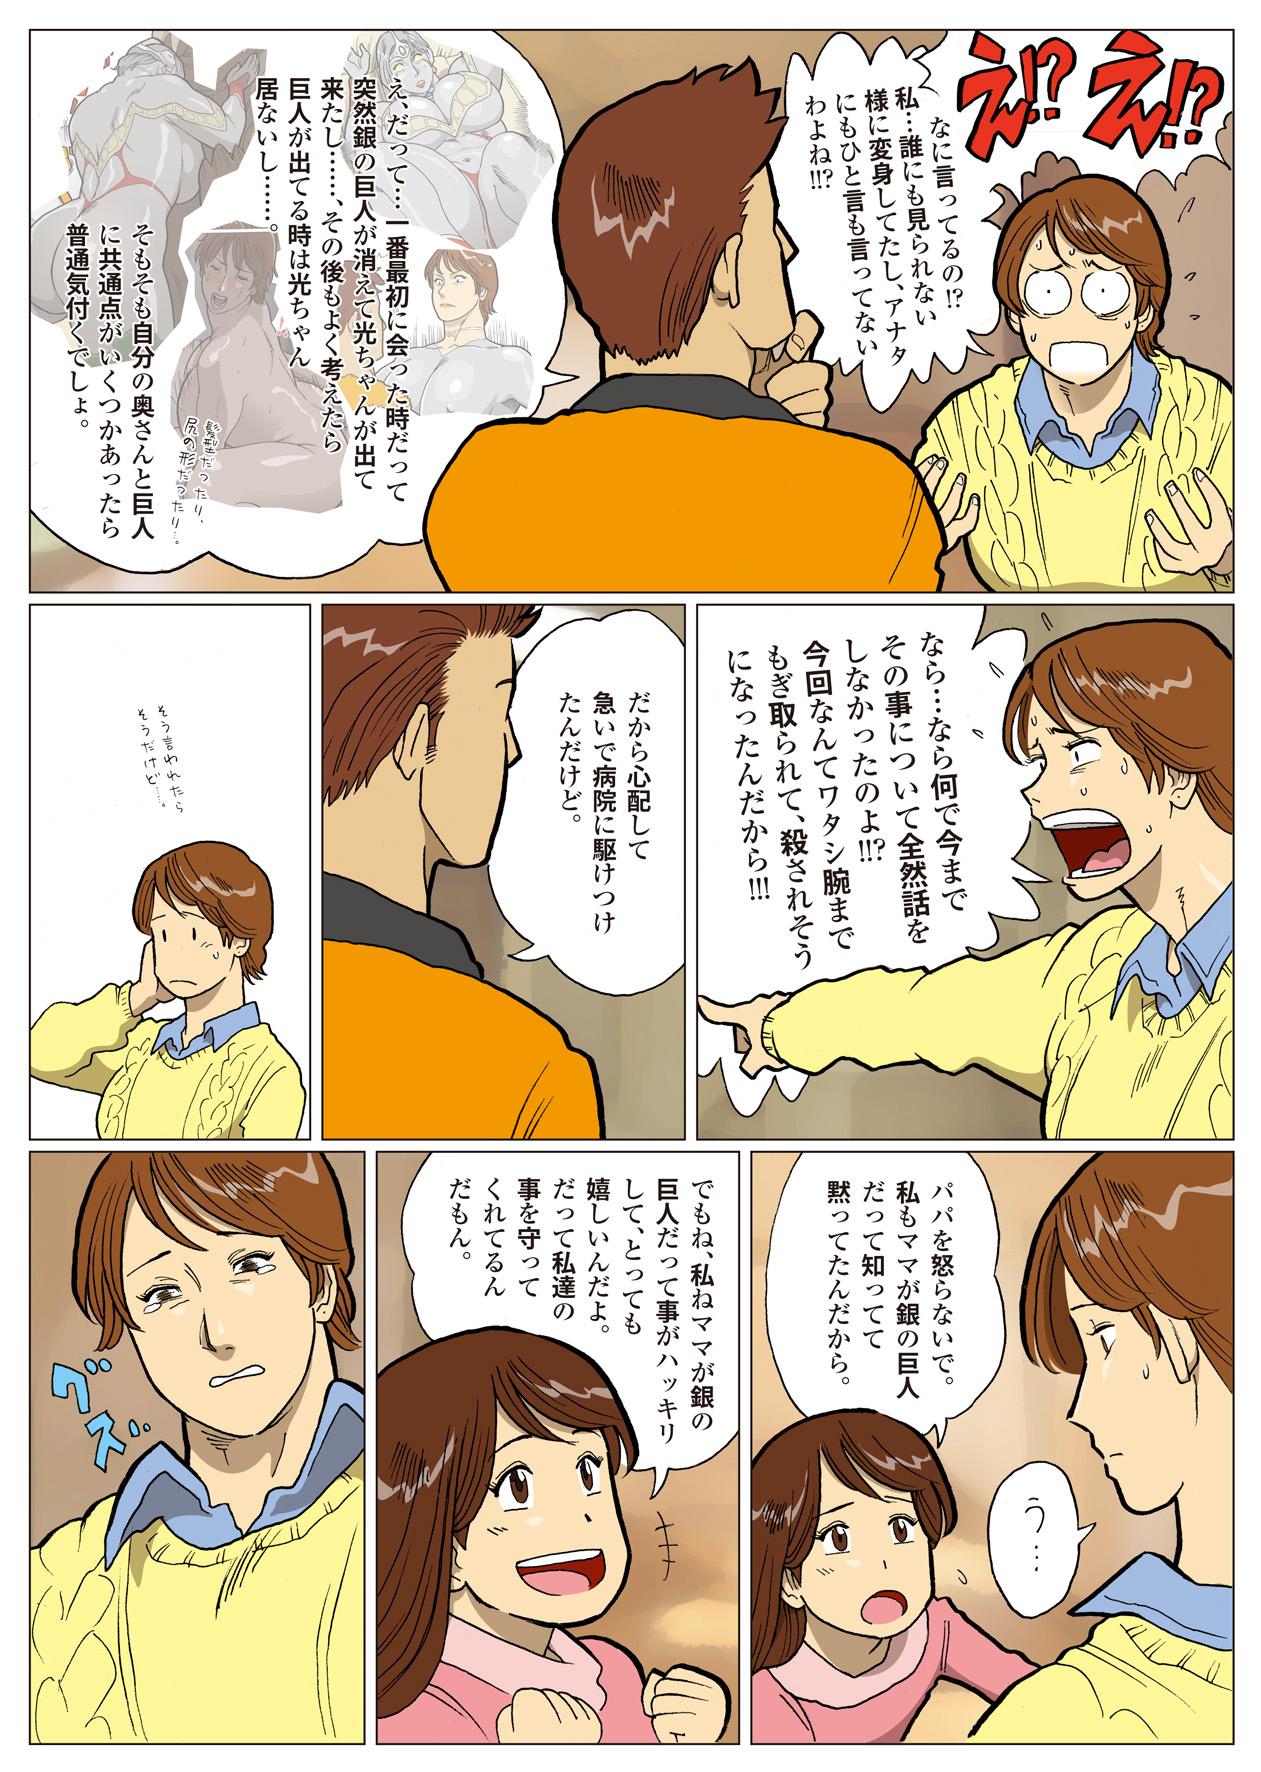 Lesbians Mousou Tokusatsu Series: Ultra Madam 6 - Ultraman Bj - Page 10